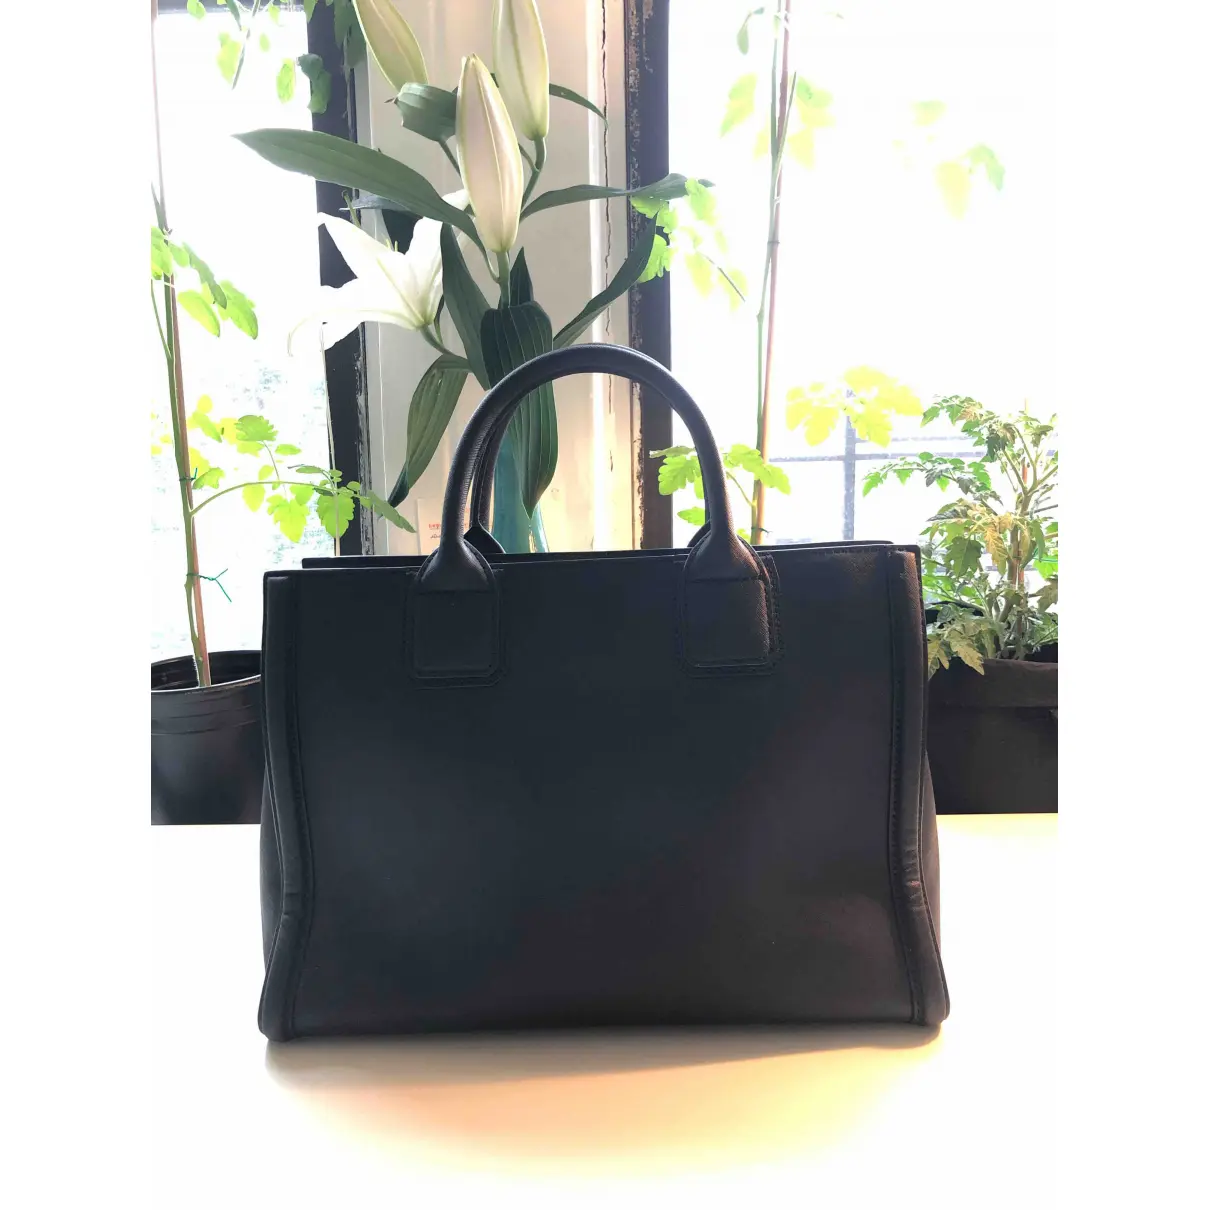 Buy Karl Lagerfeld Leather handbag online